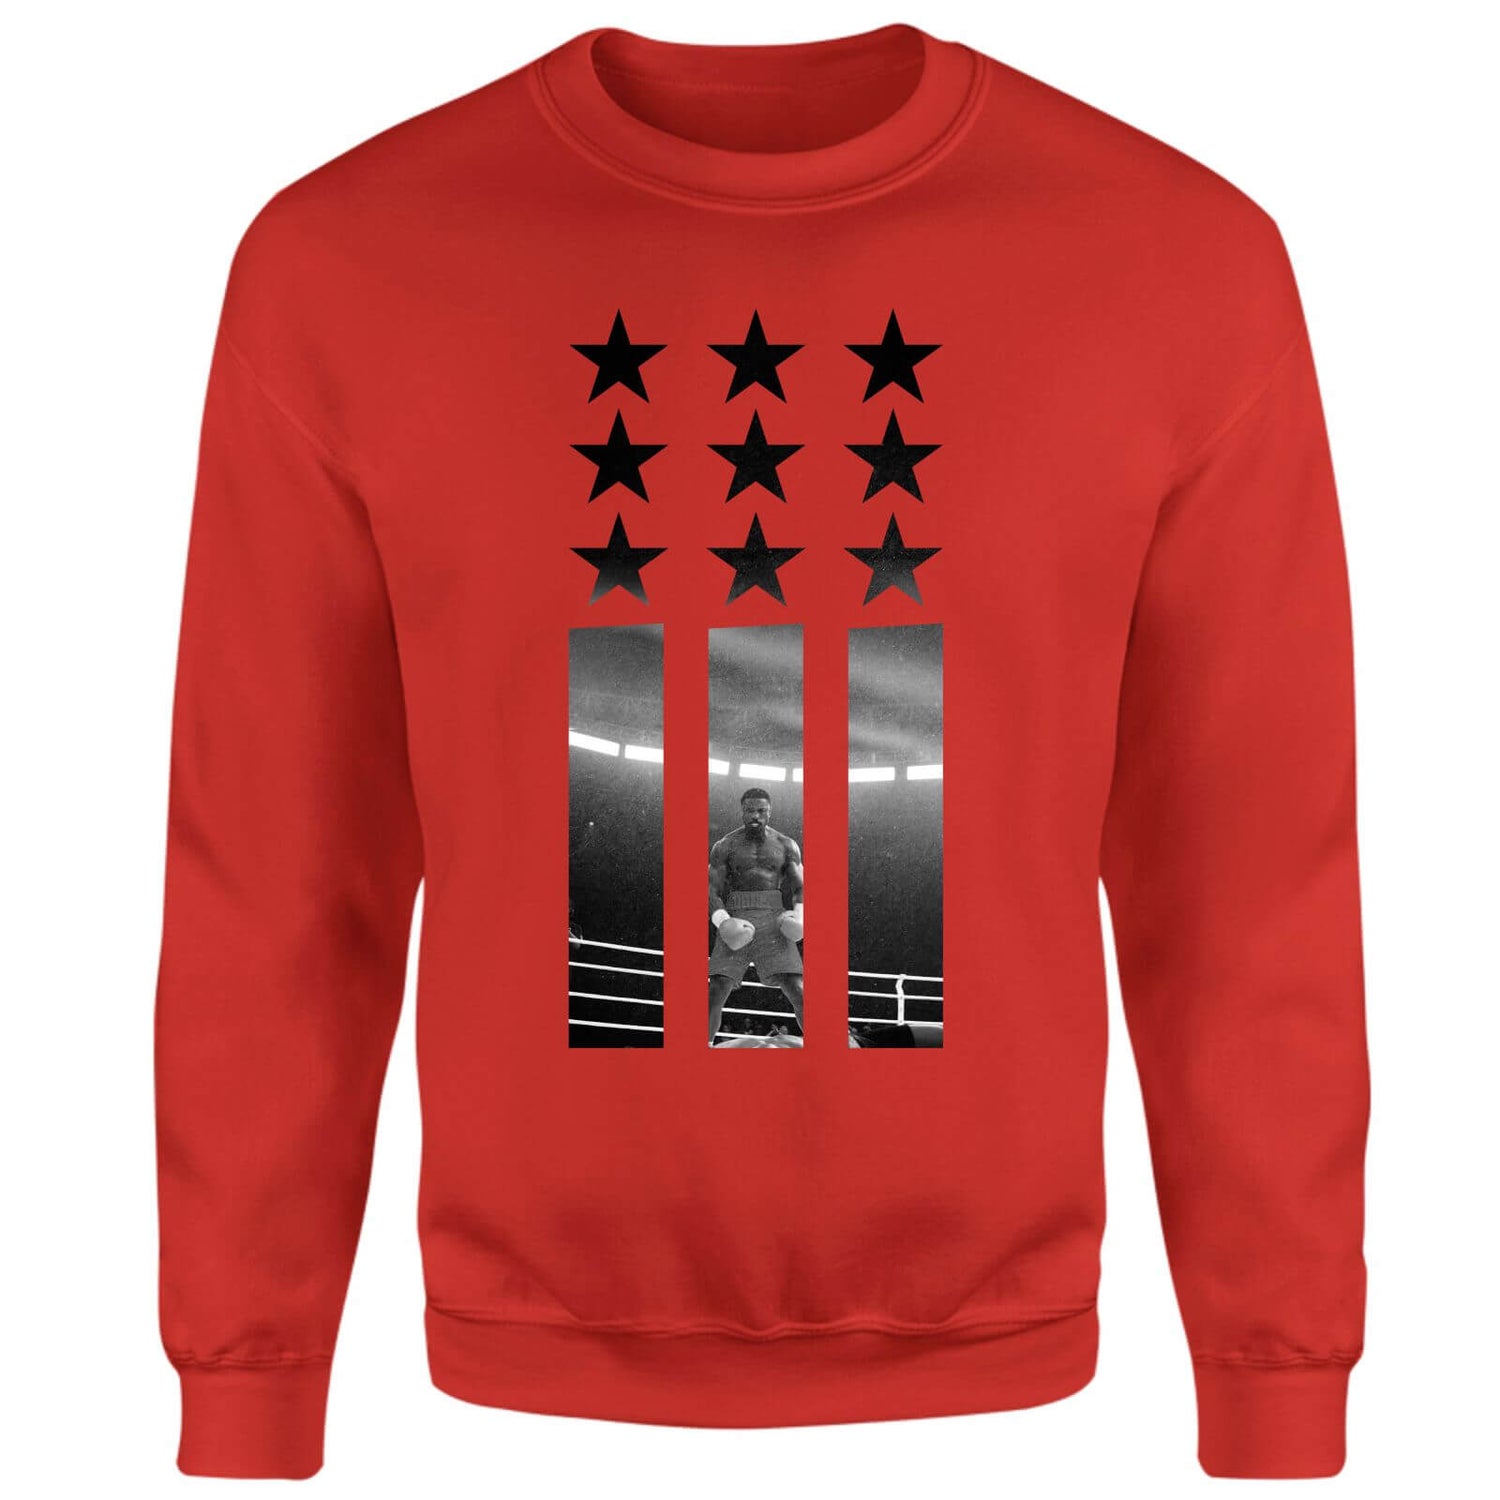 Creed Poster Stars Sweatshirt - Red